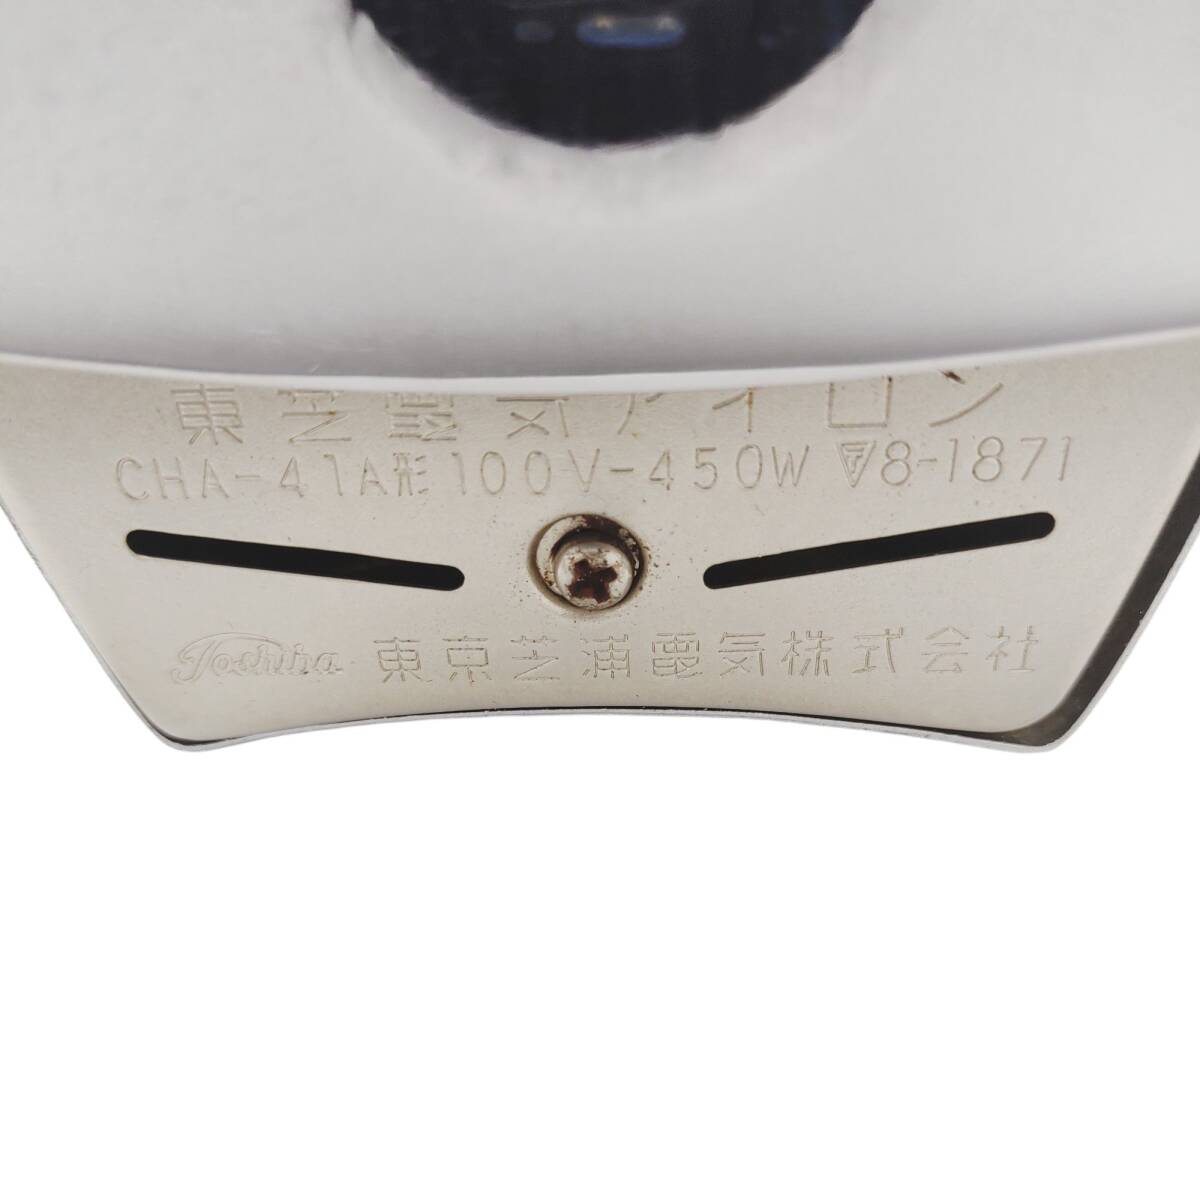 E02037 電気アイロン 東芝 CHA-41A形 100V 450W 昭和レトロ 木箱付き コレクション 東京芝浦電気の画像4